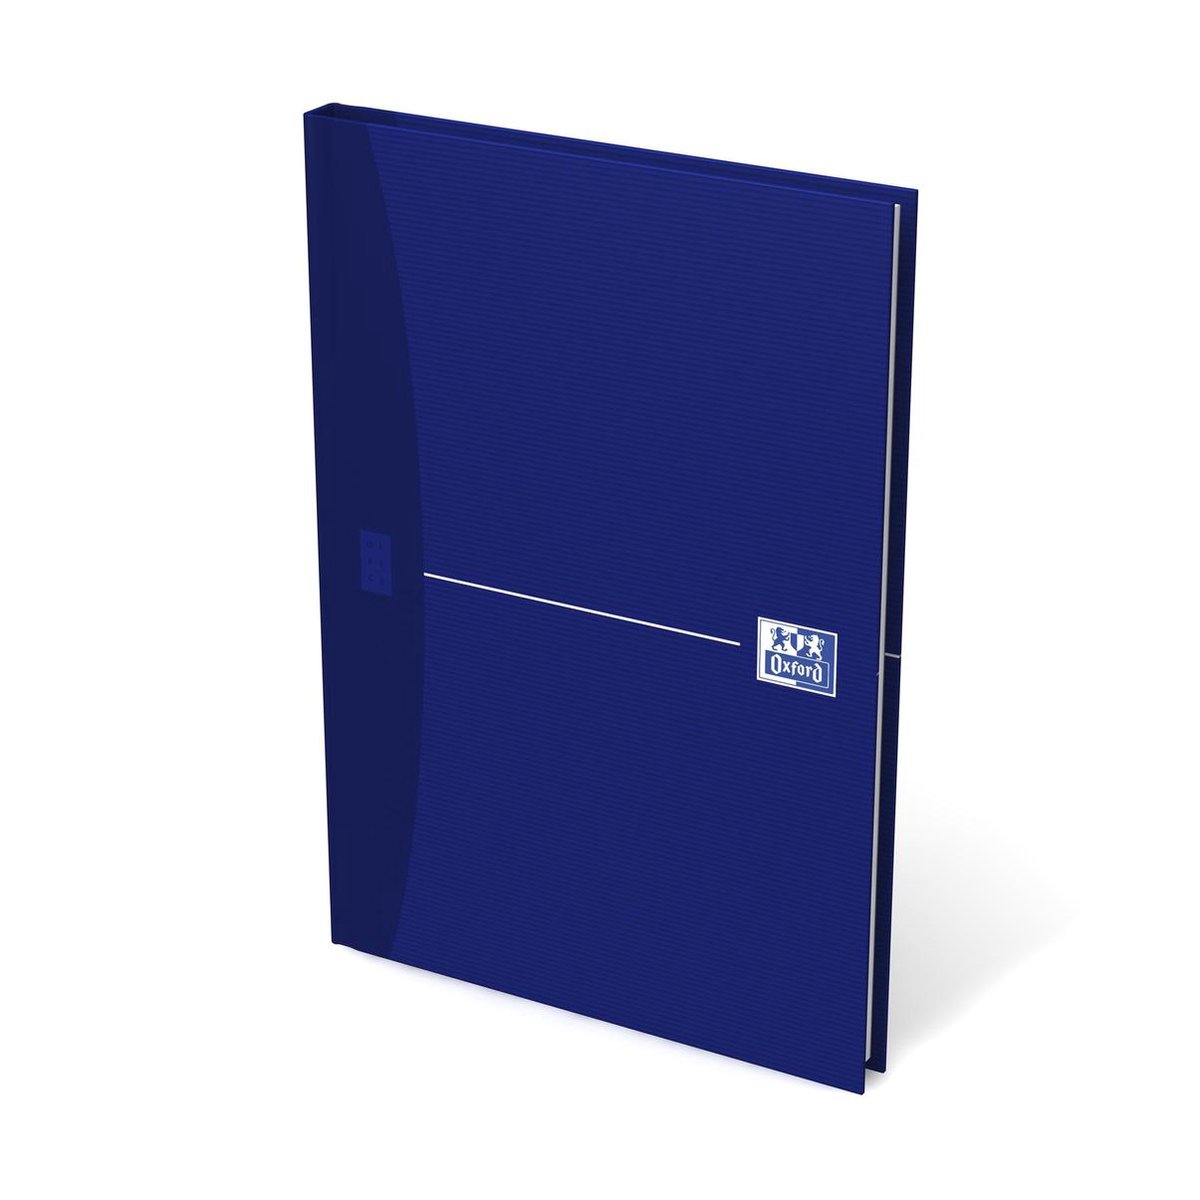 OXFORD Original Blue gebonden boek A5 geruit 5mm 96 vel 90g harde kartonnen kaft blauw